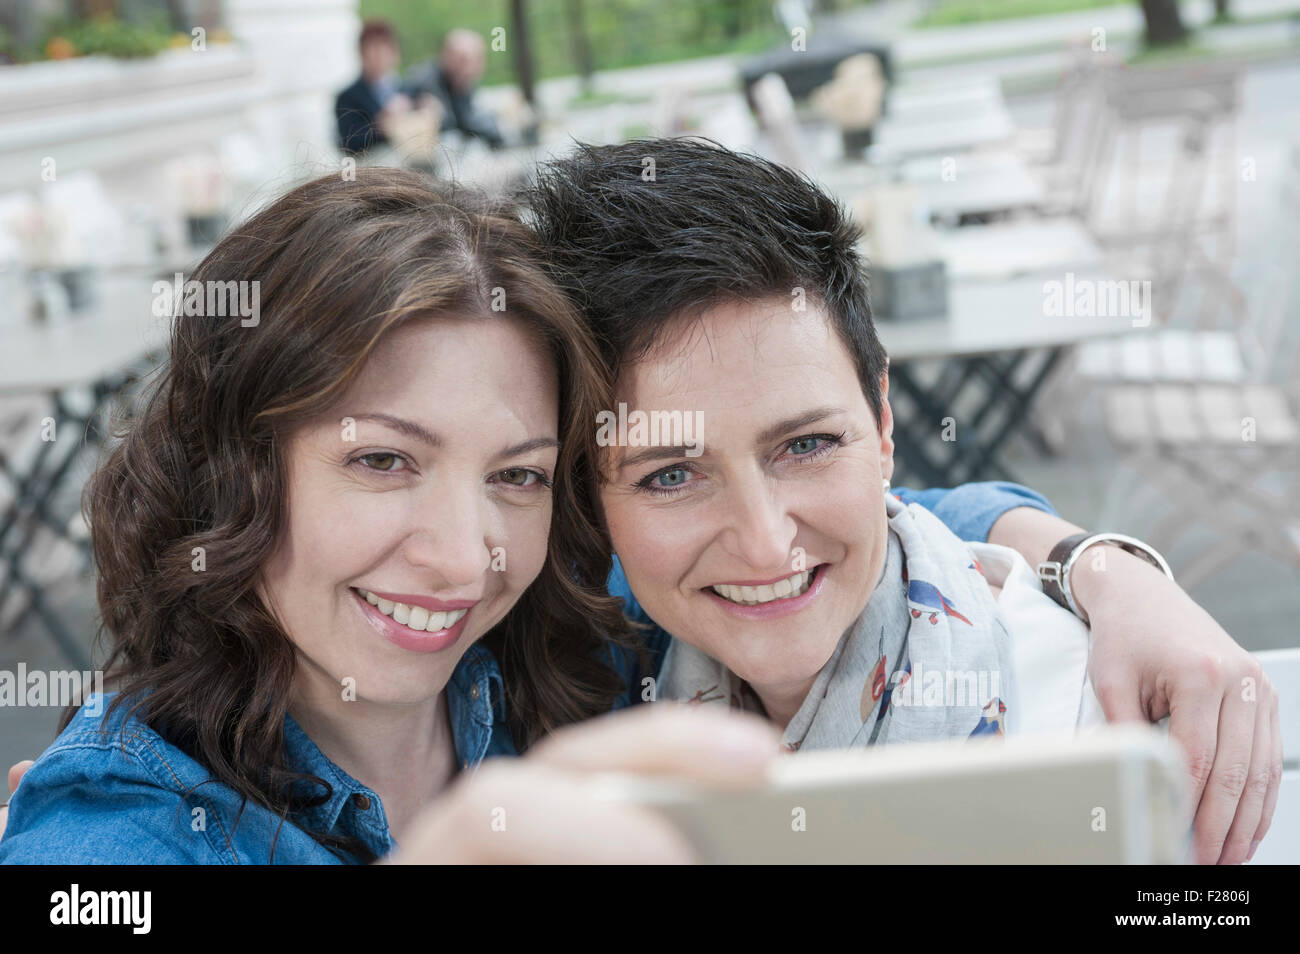 Two friends make selfy in the sidewalk cafe, Bavaria, Germany Stock Photo